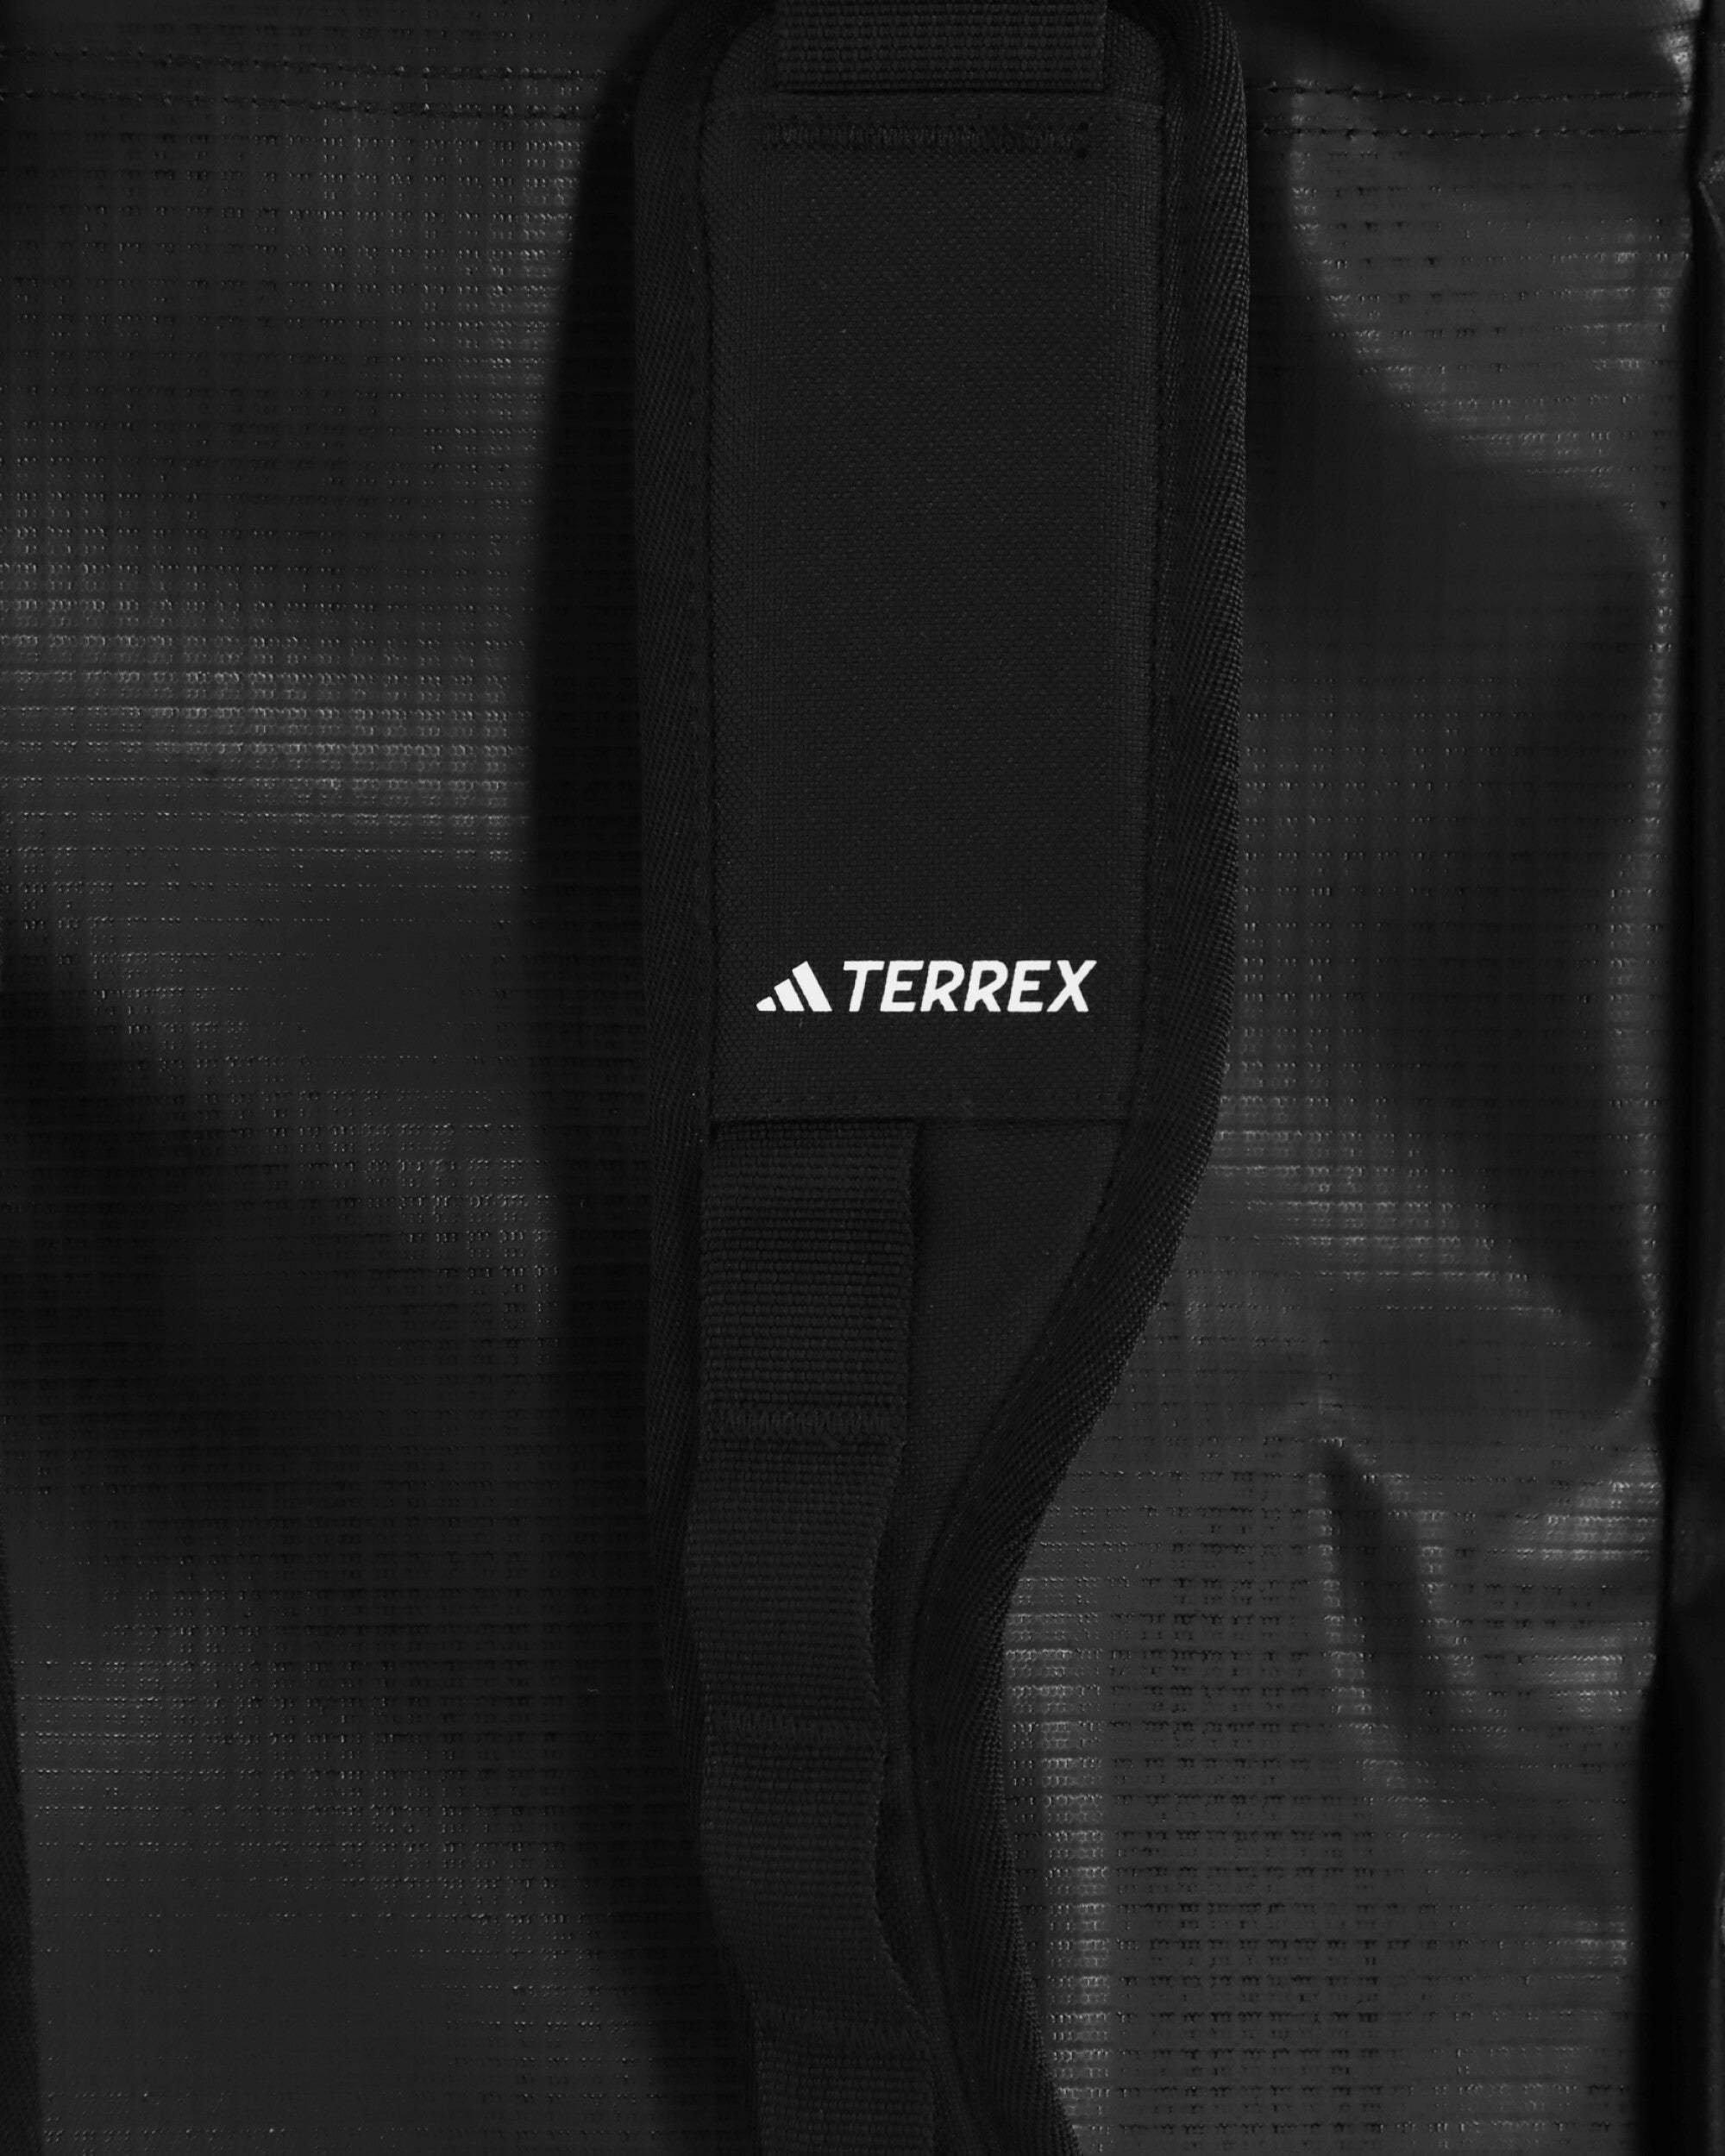 adidas Trx Duffel L Black/White Bags and Backpacks Travel Bags IC5652 001